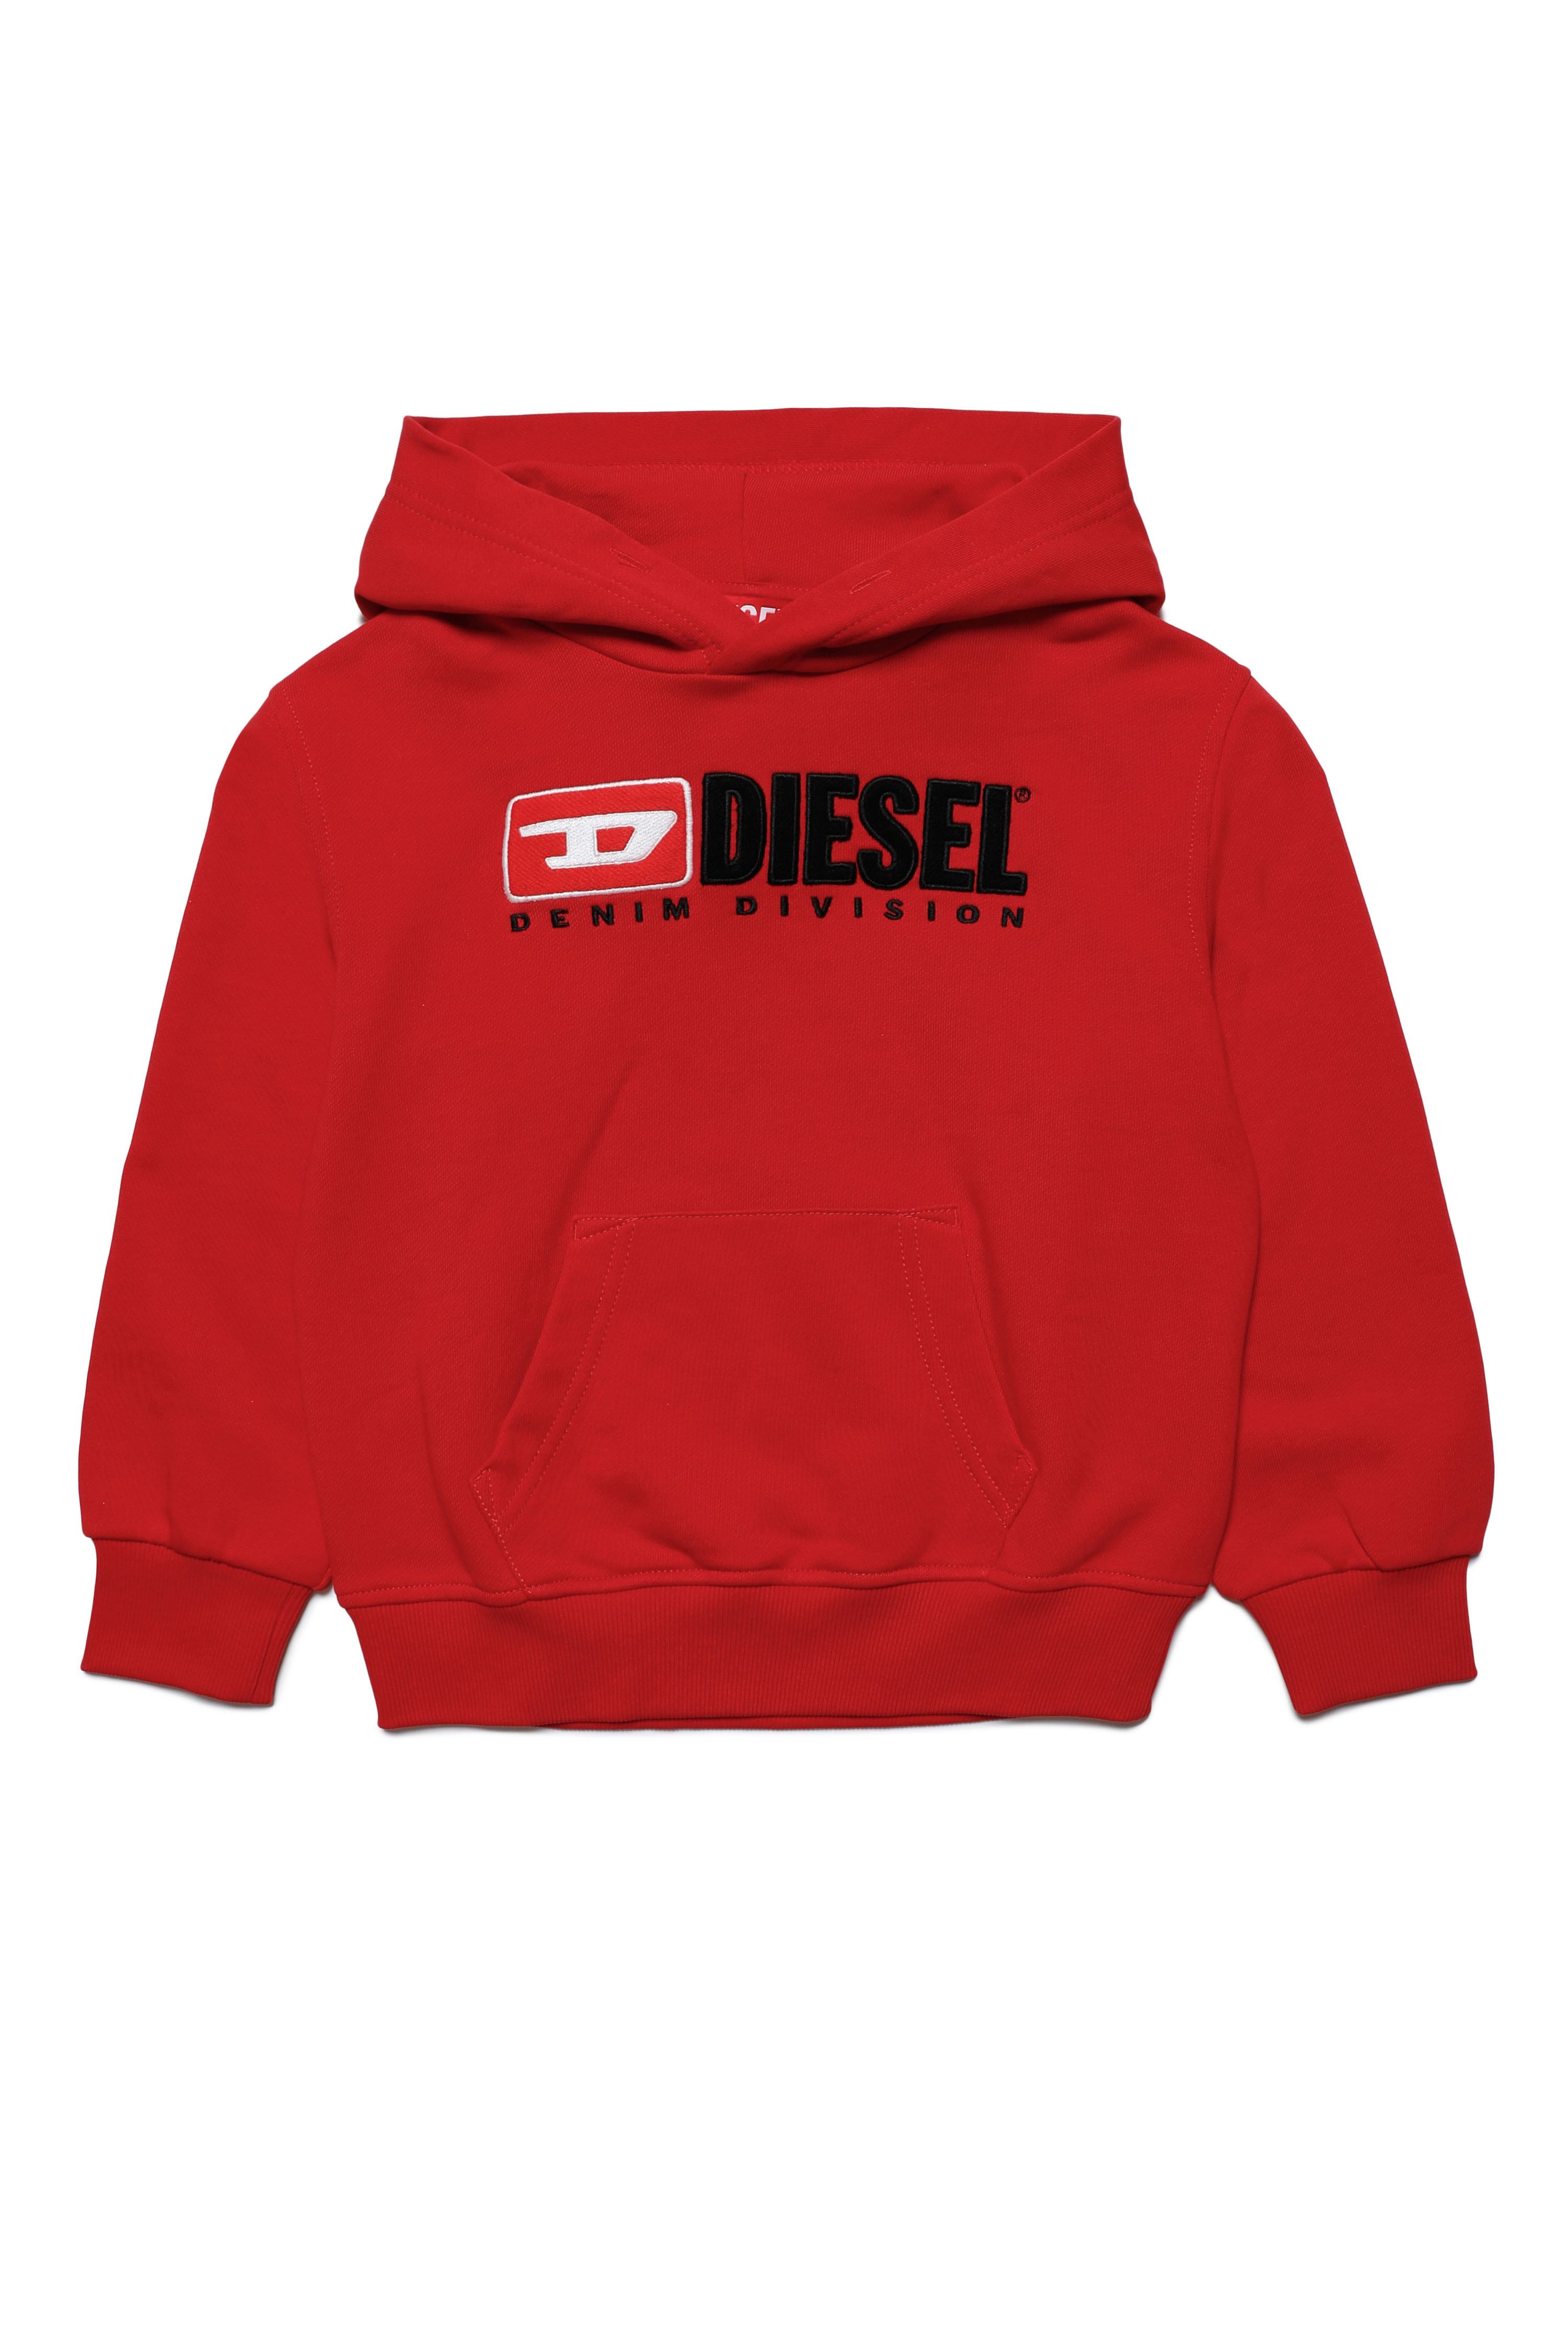 Diesel - SGINNDIVE OVER, Rot - Image 1